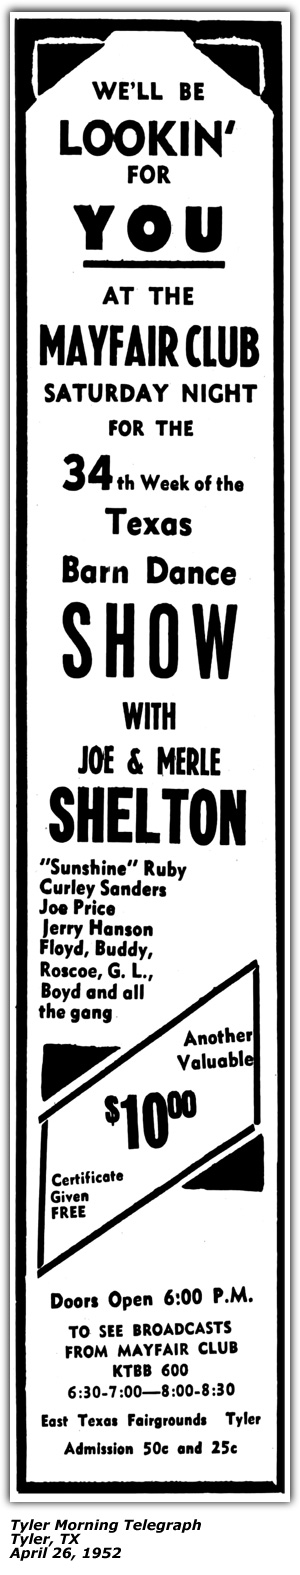 Promo Ad - Mayfair Club - Texas Barn Dance - Joe and Merle Shelton - Sunshine Ruby - Curley Sanders - Joe Price - Jerry Hanson - April 1952